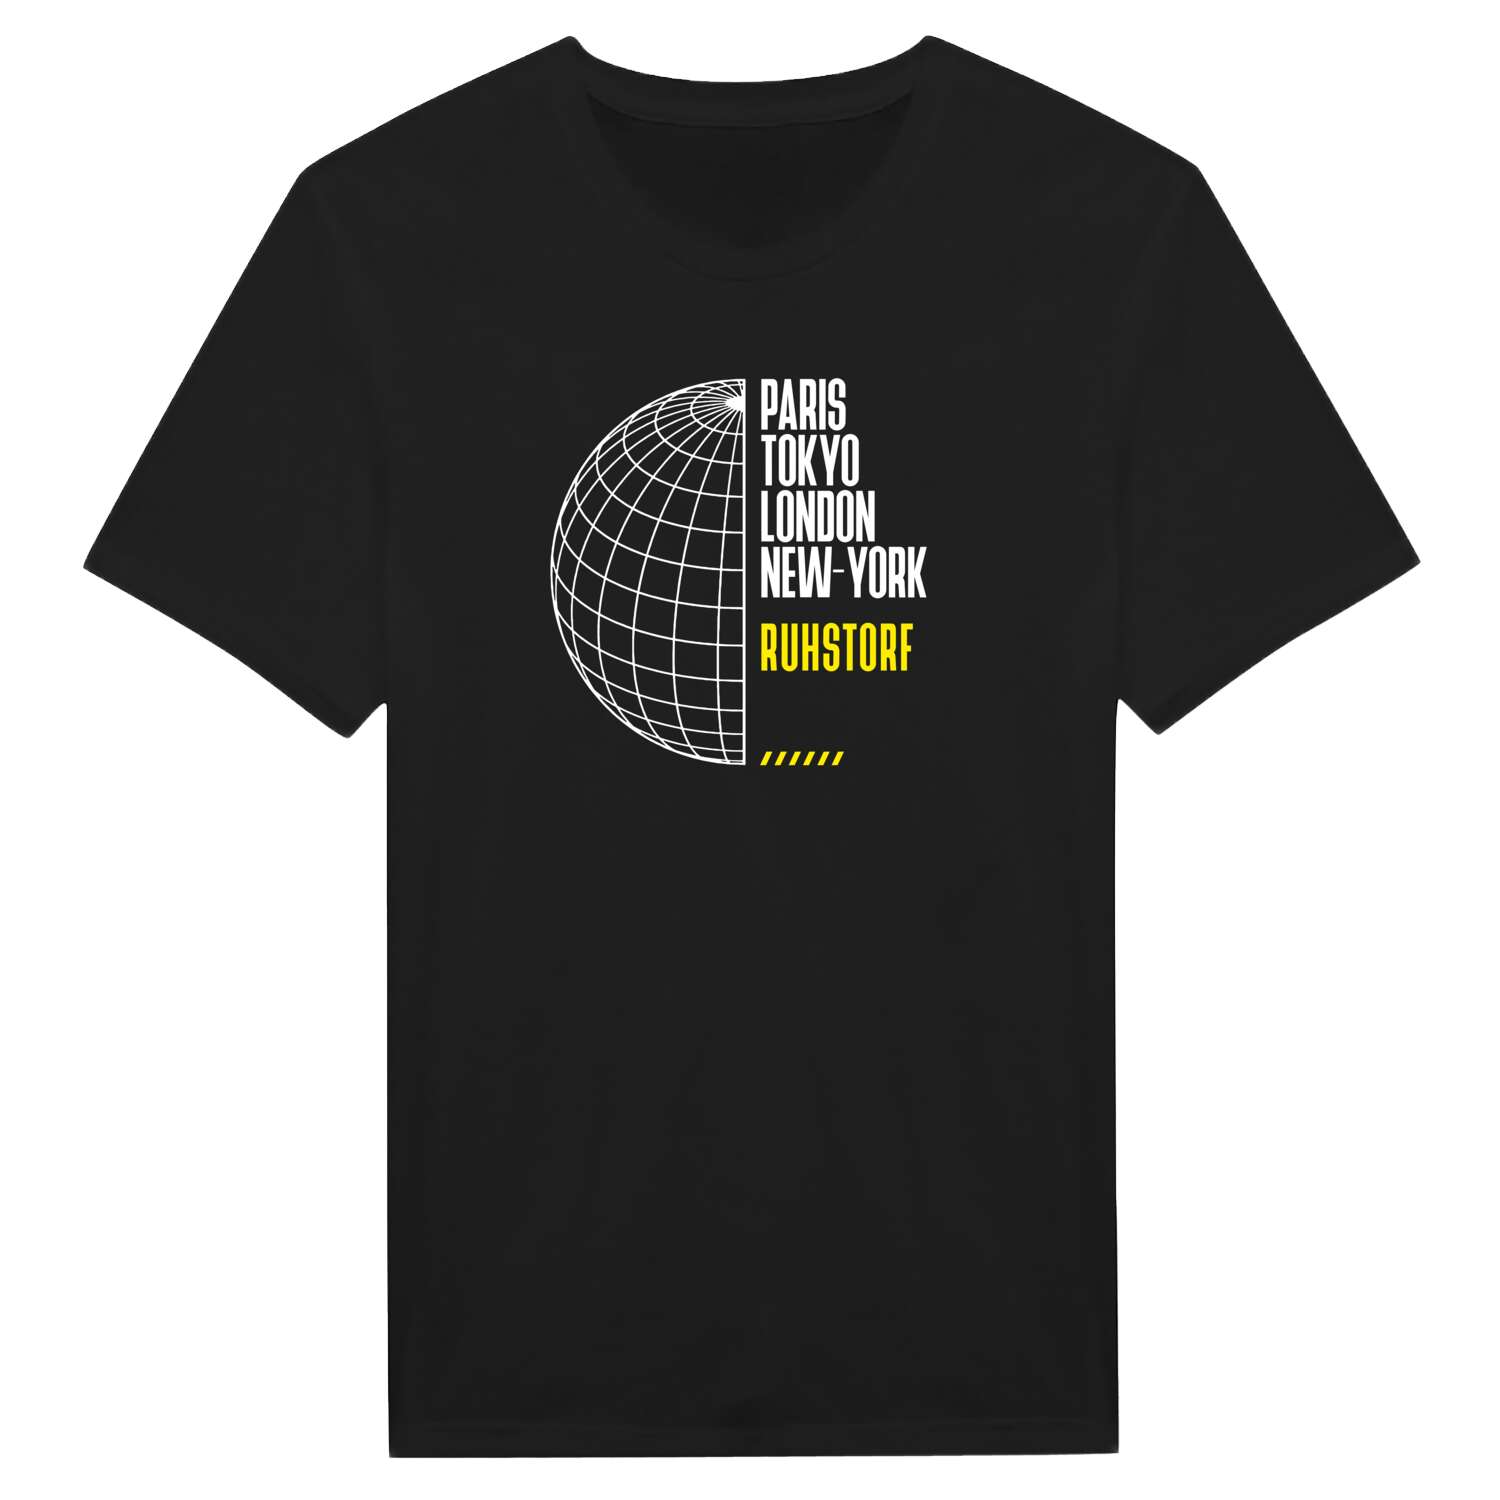 Ruhstorf T-Shirt »Paris Tokyo London«